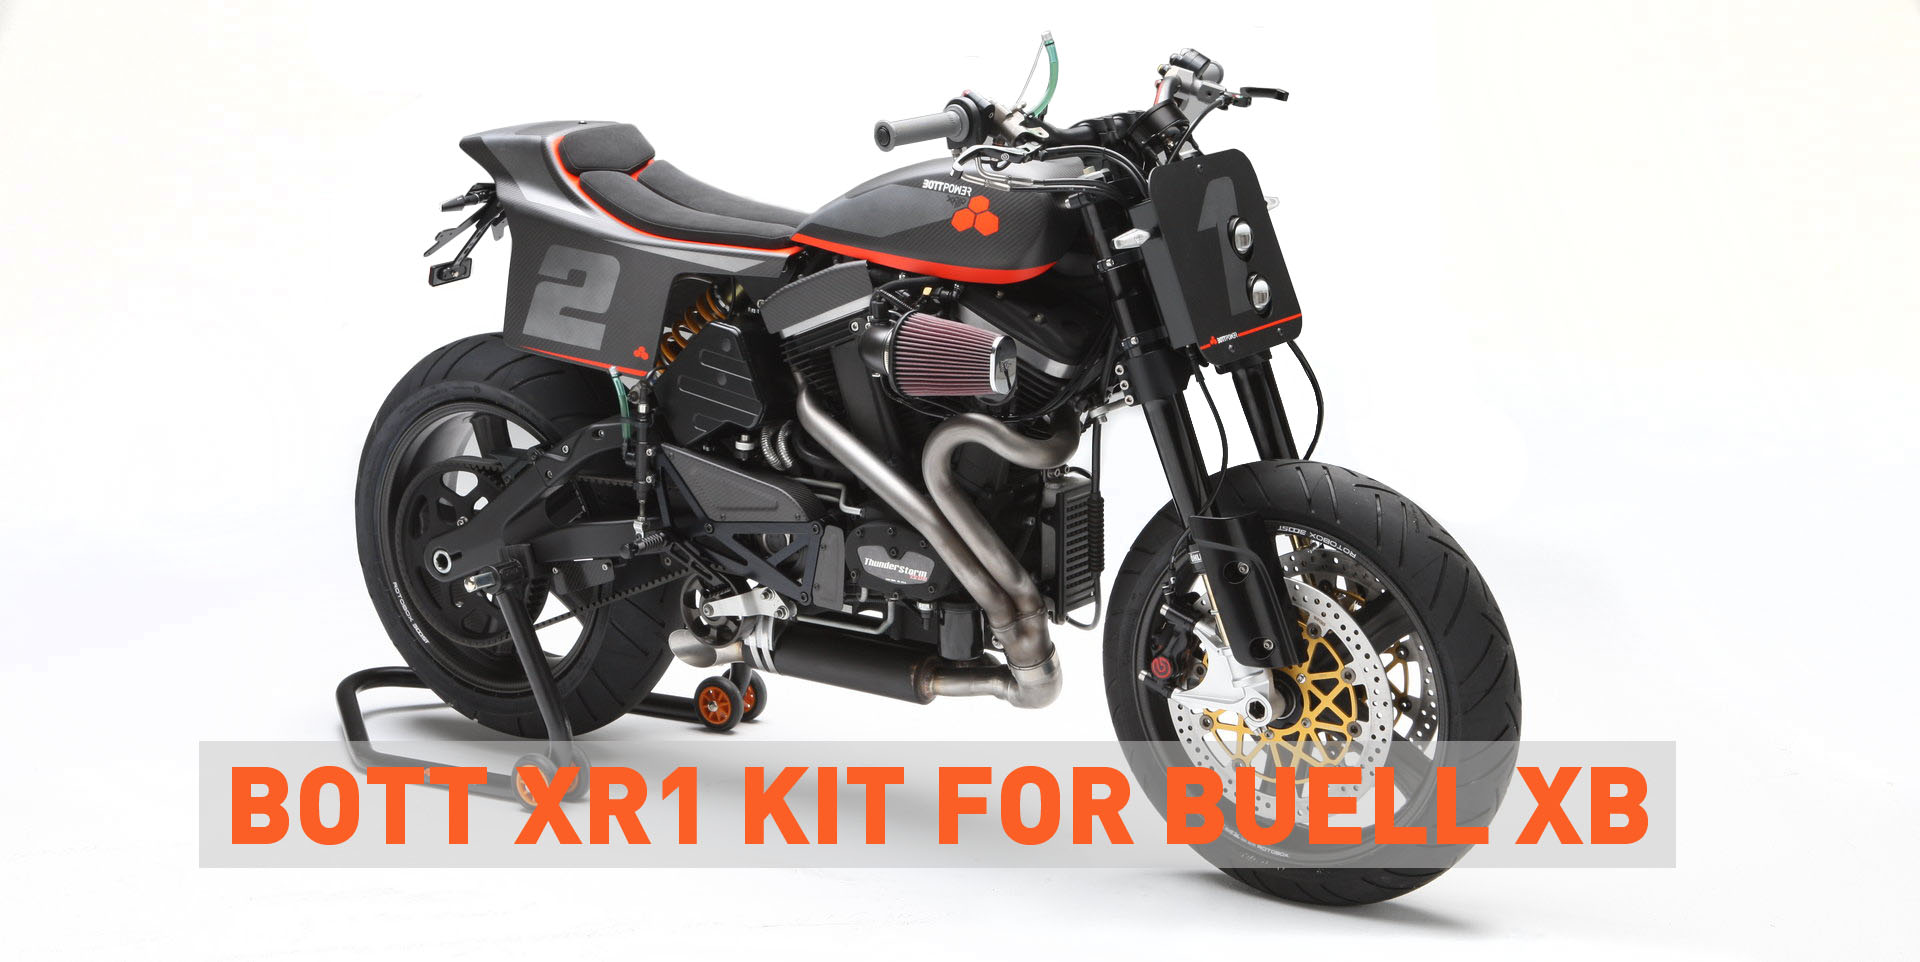 Buell XB customized with BOTT XR1 kit